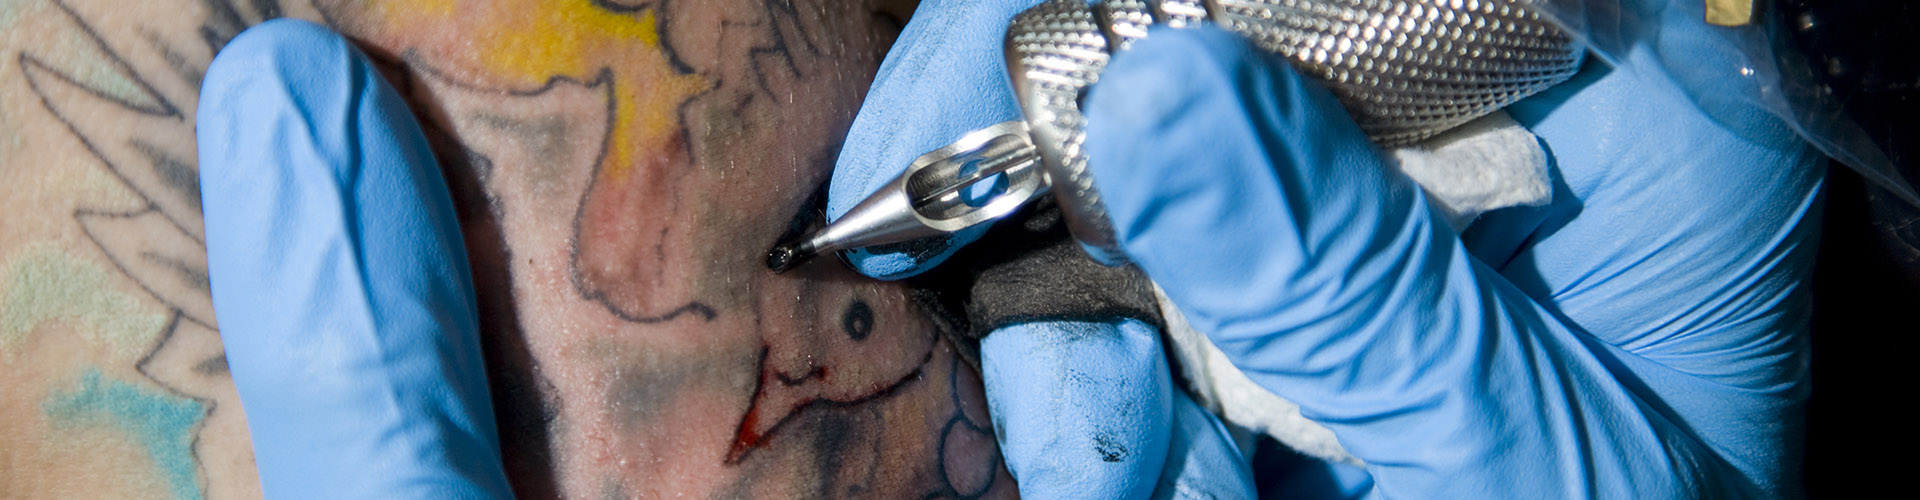 tattoo artist using gloves